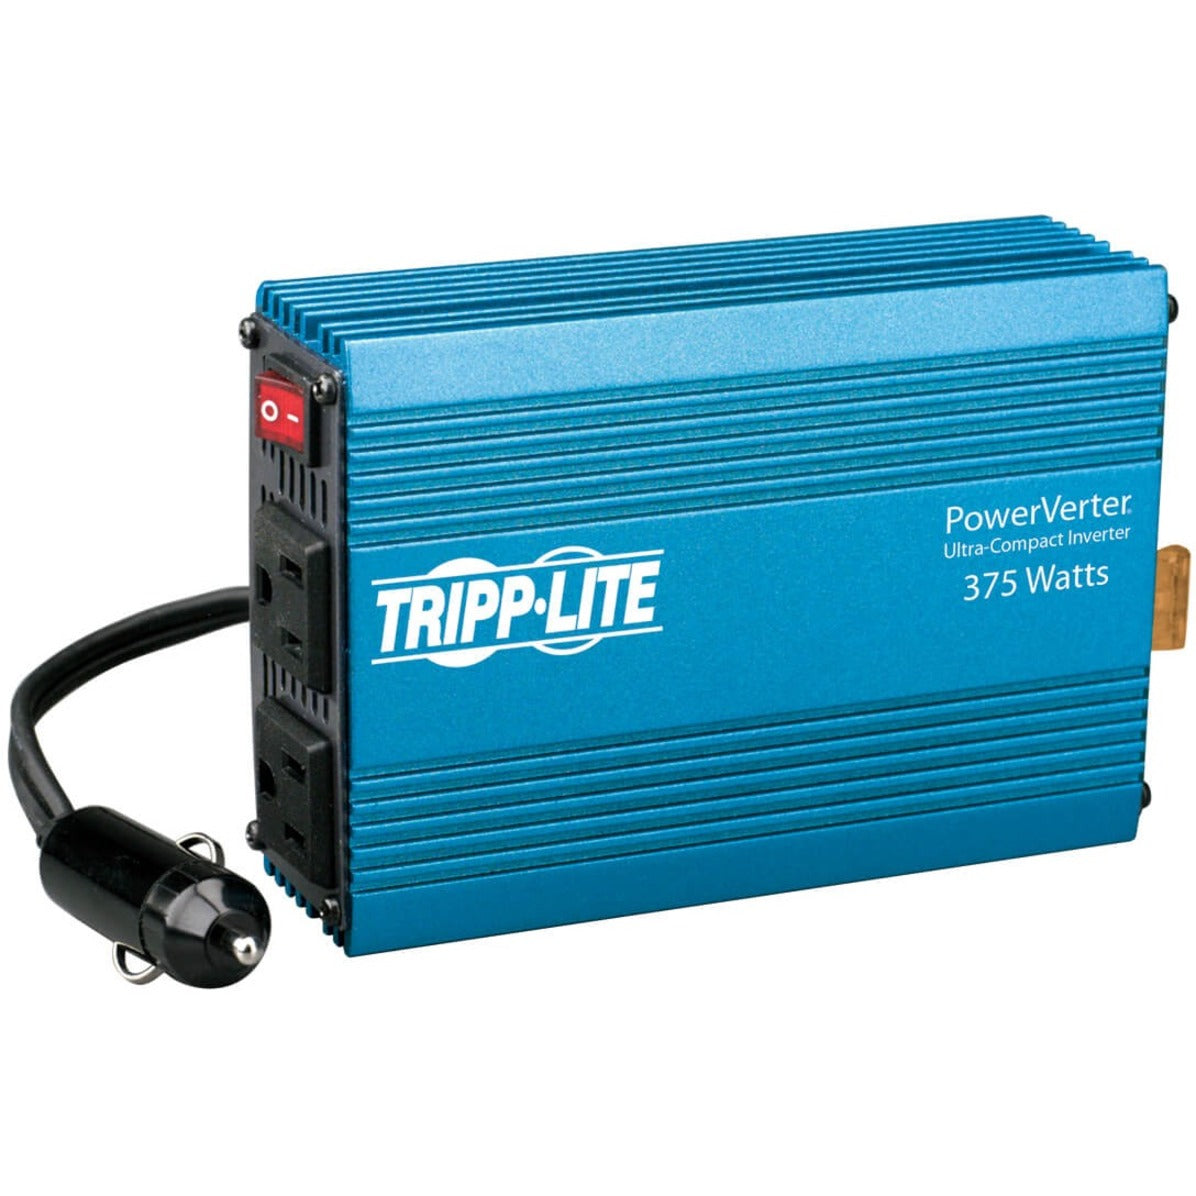 Tripp Lite PV375 PowerVerter 375W Ultra-compact Inverter, 12V DC to 120V AC, 2 AC Outlets